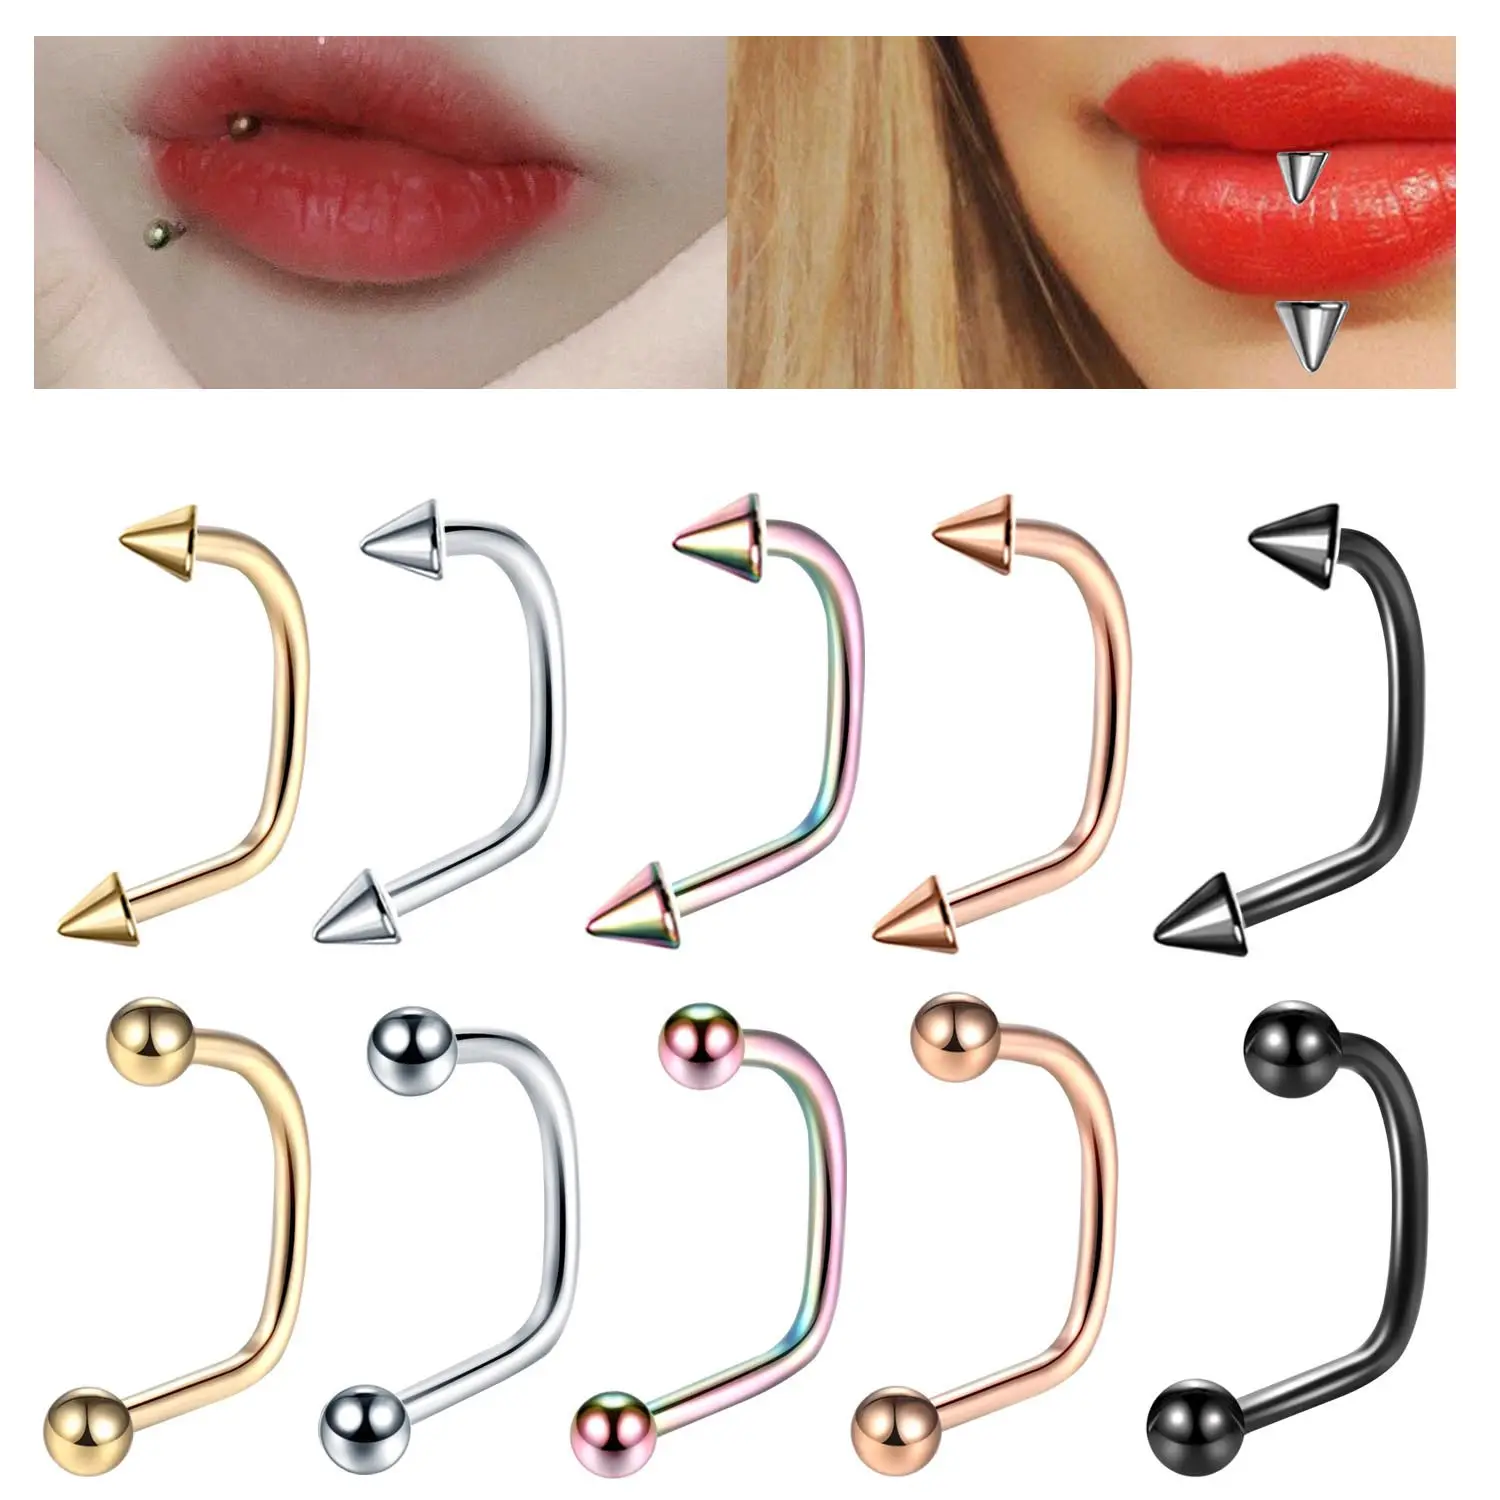 New 16G C-Shaped Surgical Steel Hoop Lip Rings Barbell Monroe Labret Medusa Piercing Jewelry for Women Men